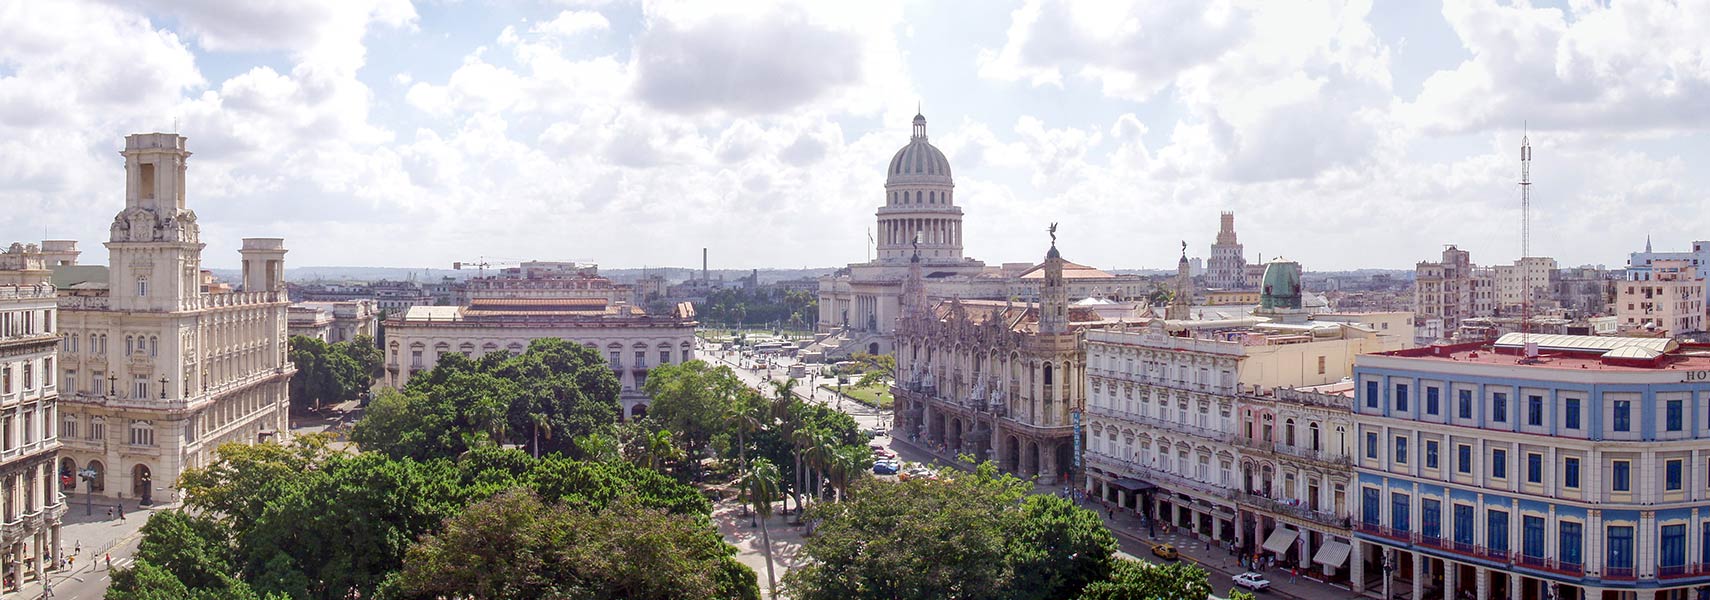 Old Havana with El Capitolio, capital city of Cuba